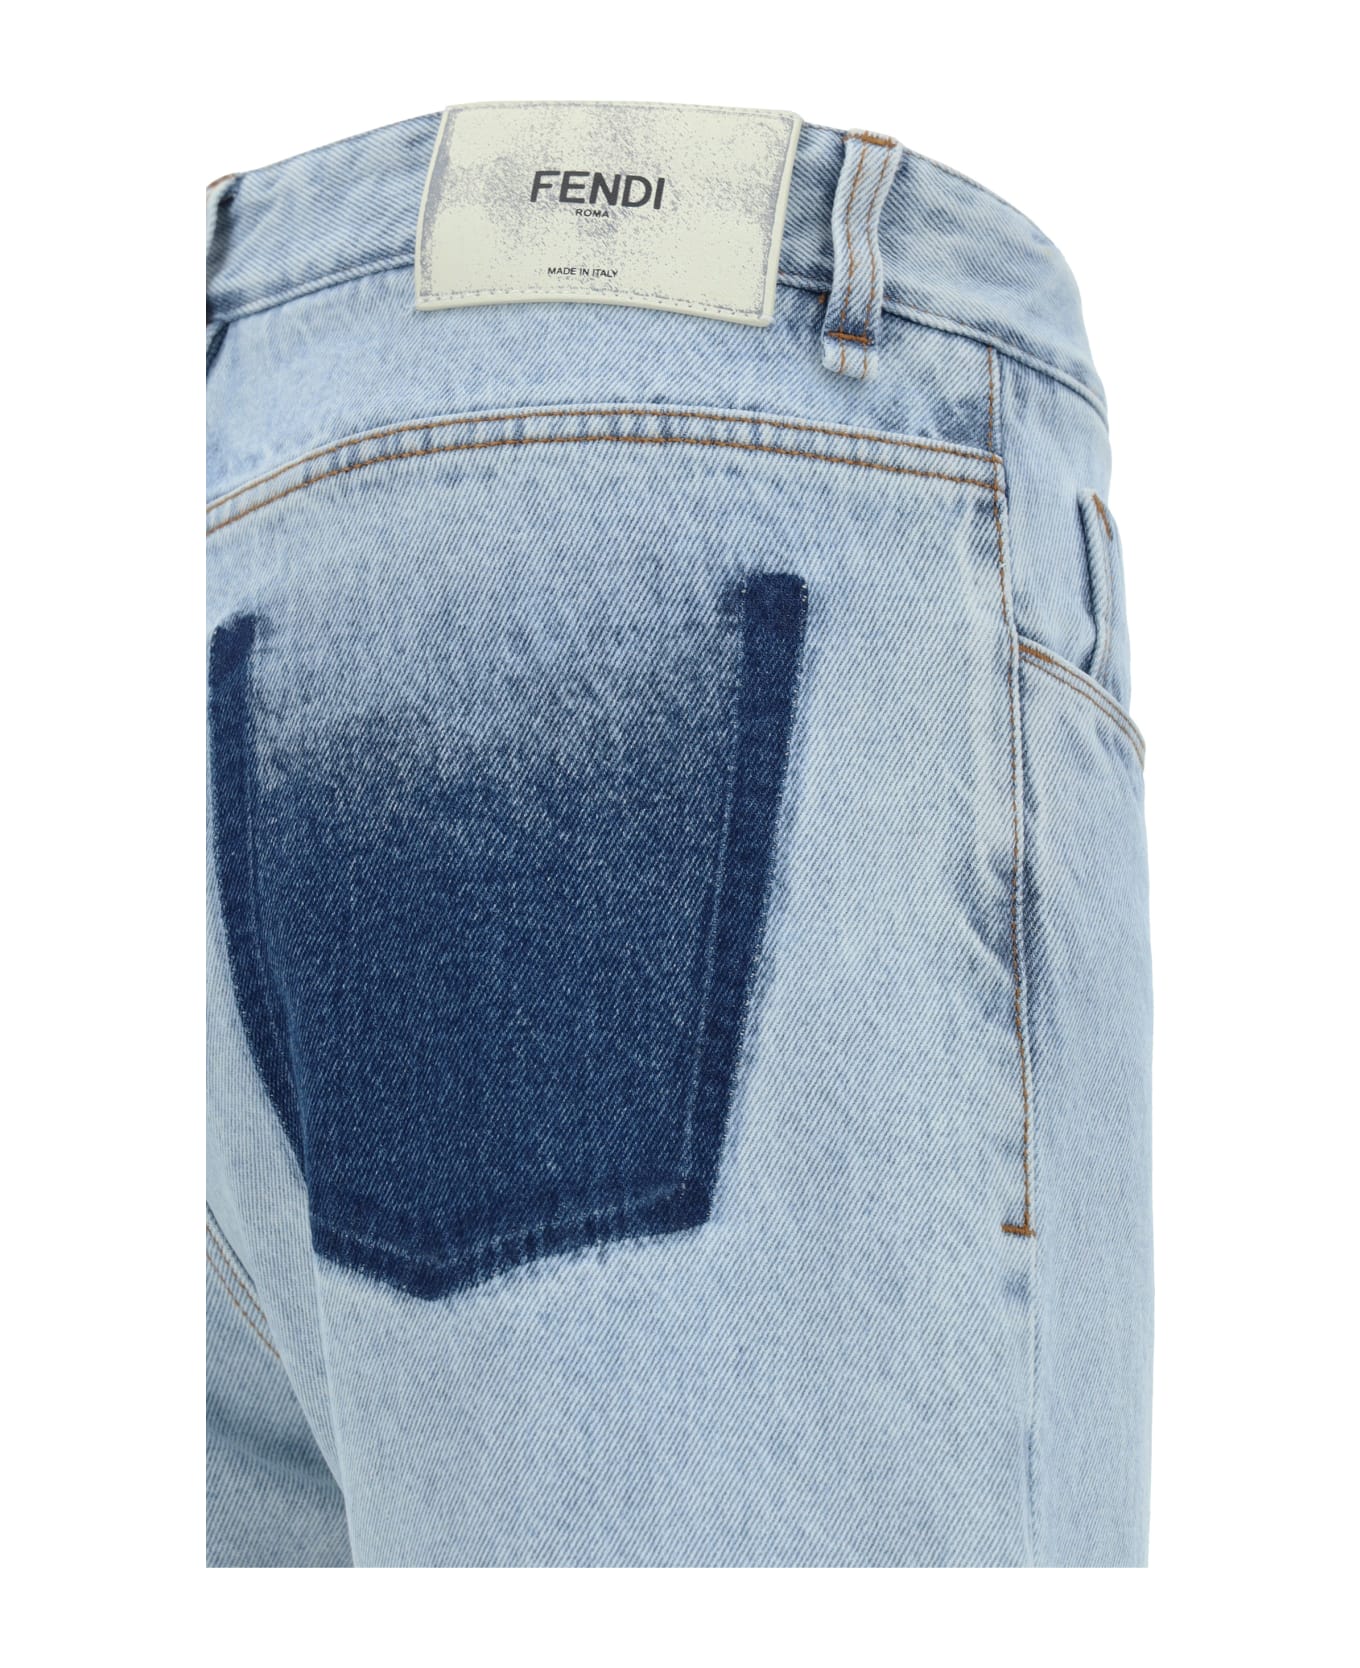 Fendi Jeans - Light Blue